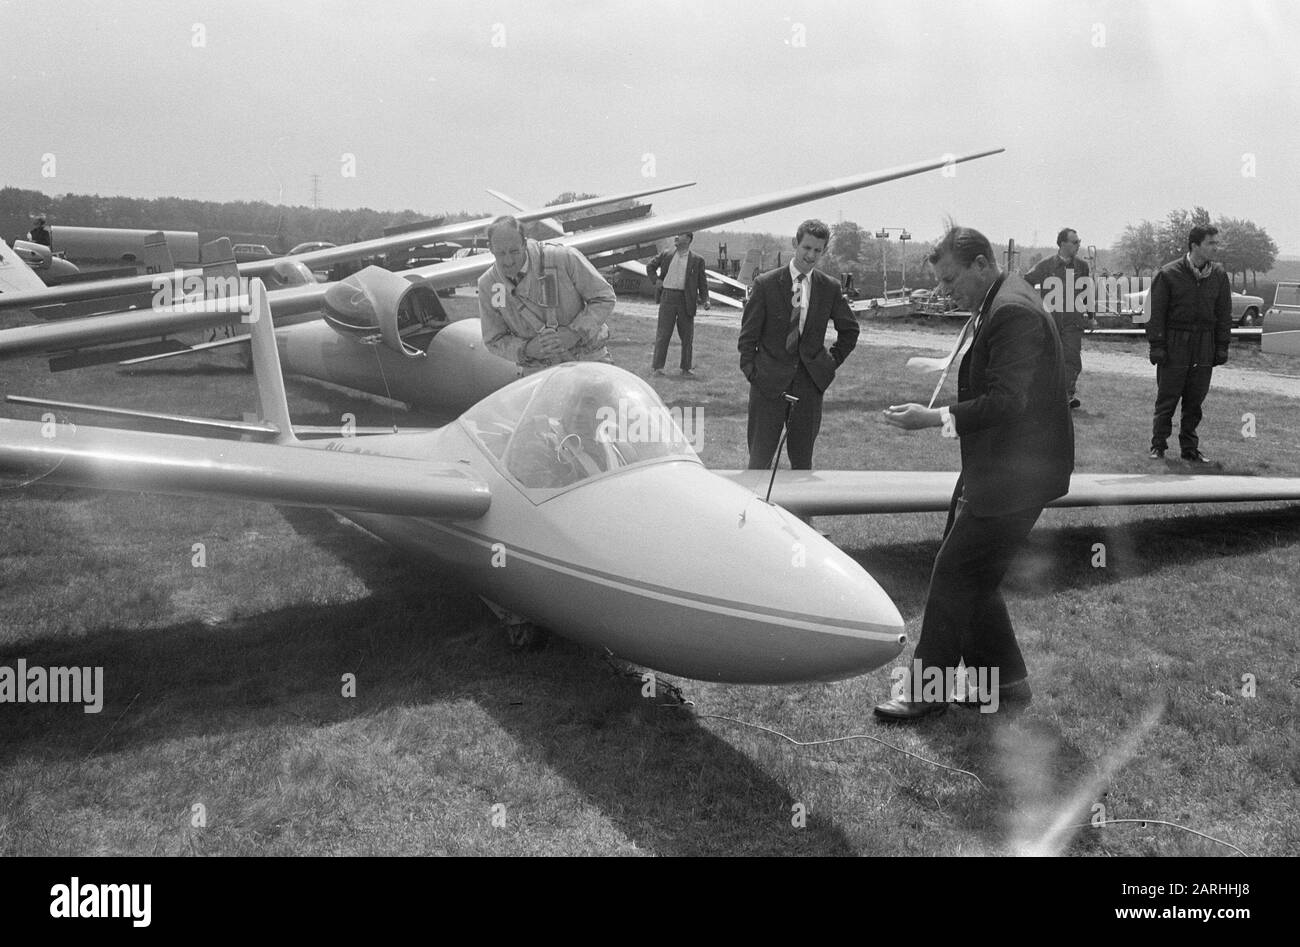 Gliding competition at Terlet, Van Bree, Father Bernse and R. Breunissen Date: May 29, 1962 Location: Gelderland, Terlet Personal name: Breunissen, R. Stock Photo